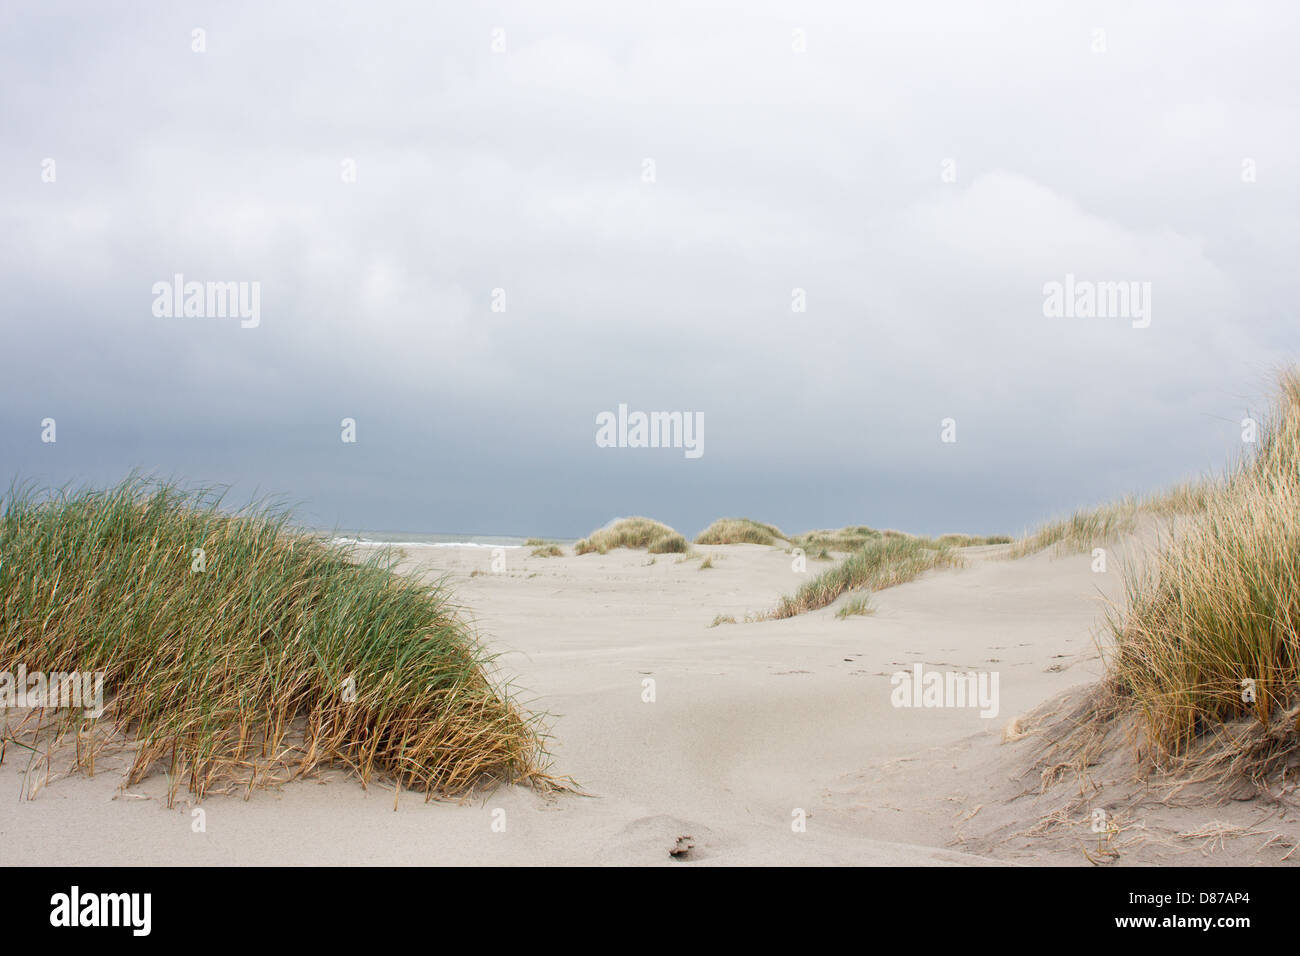 Beachgrass or Marramgrass in the dunes under a dark sky Stock Photo